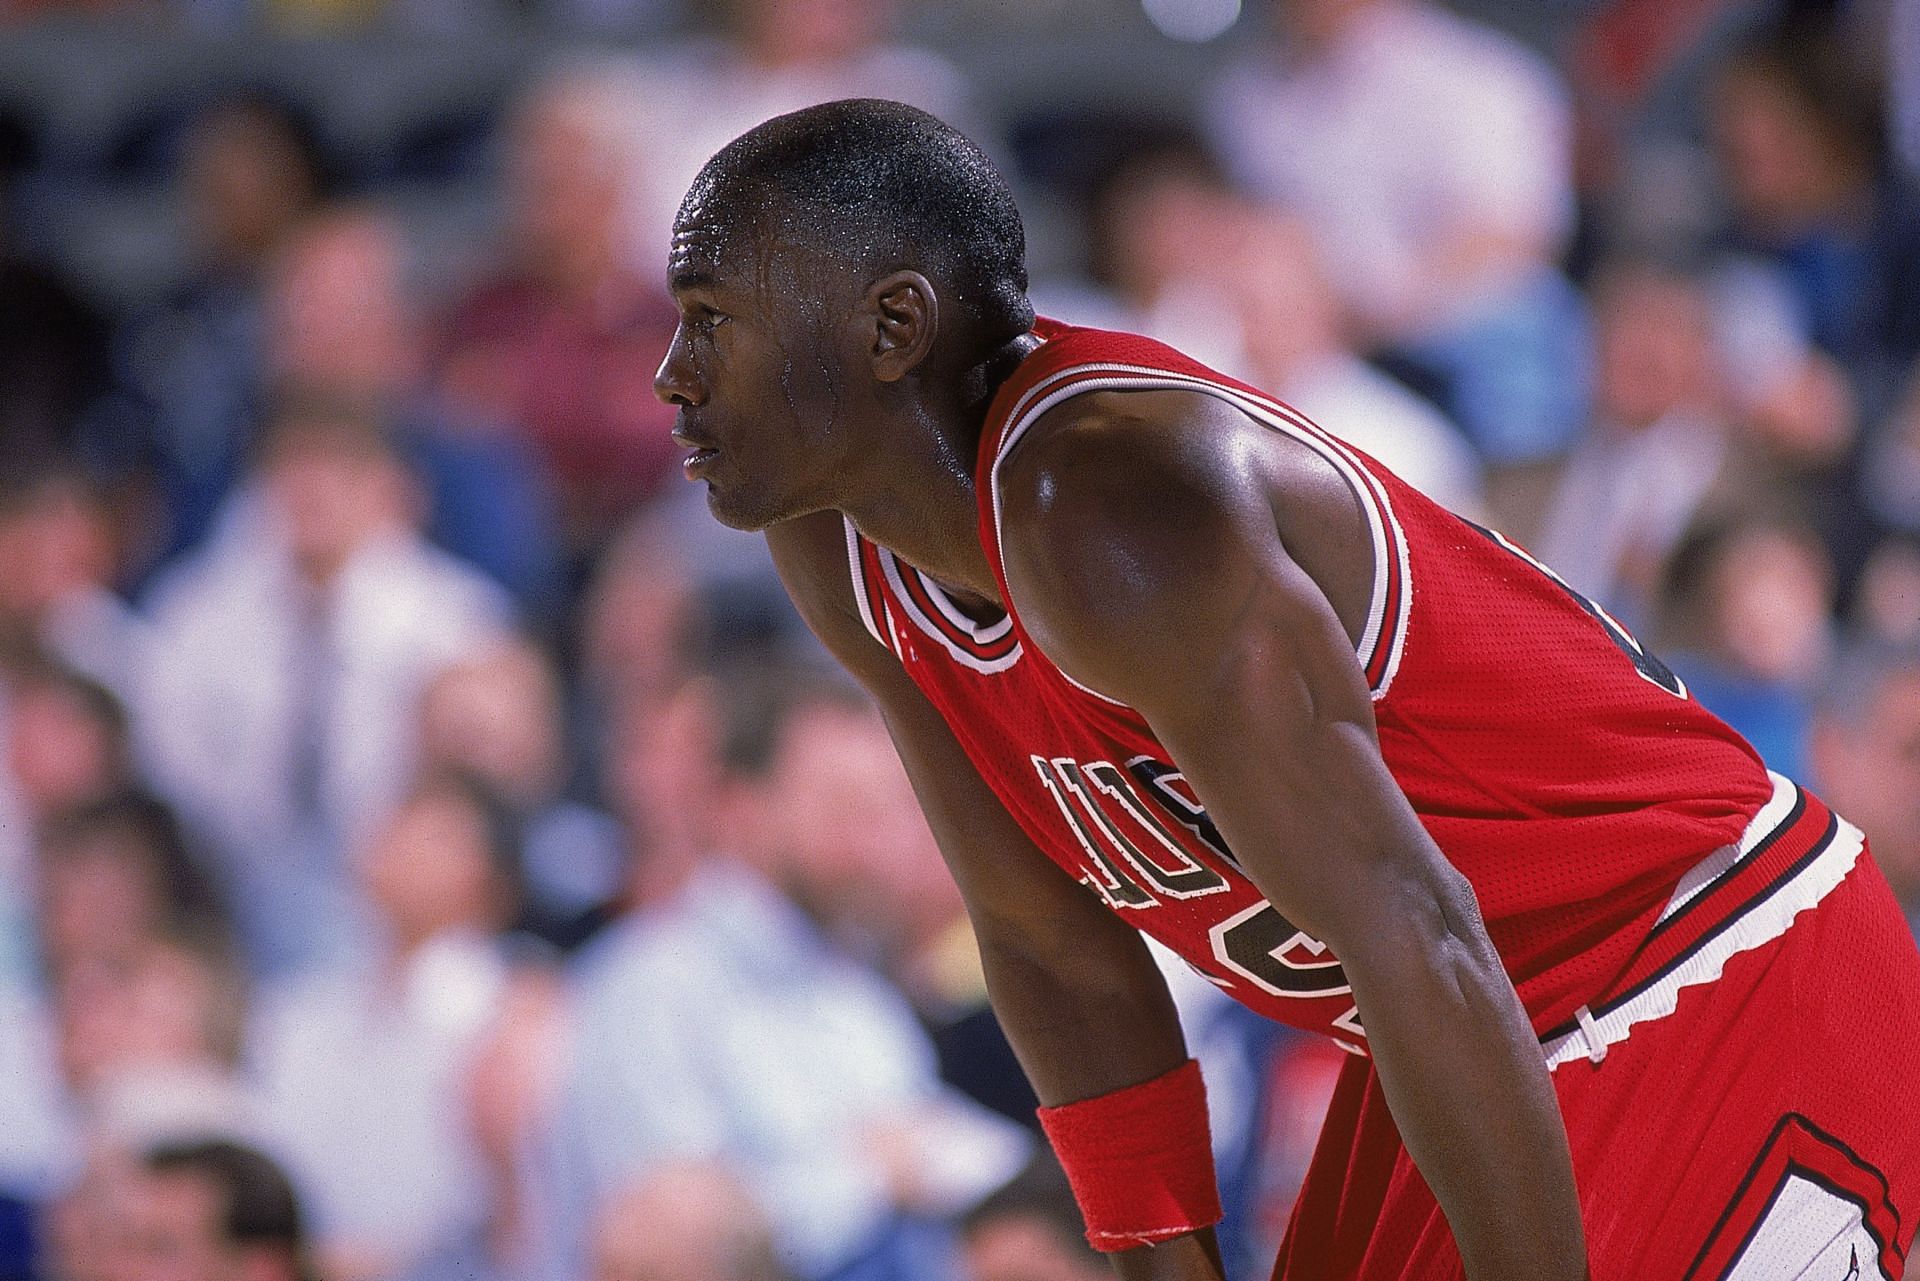 Michael Jordan in action during the 1988-89 season